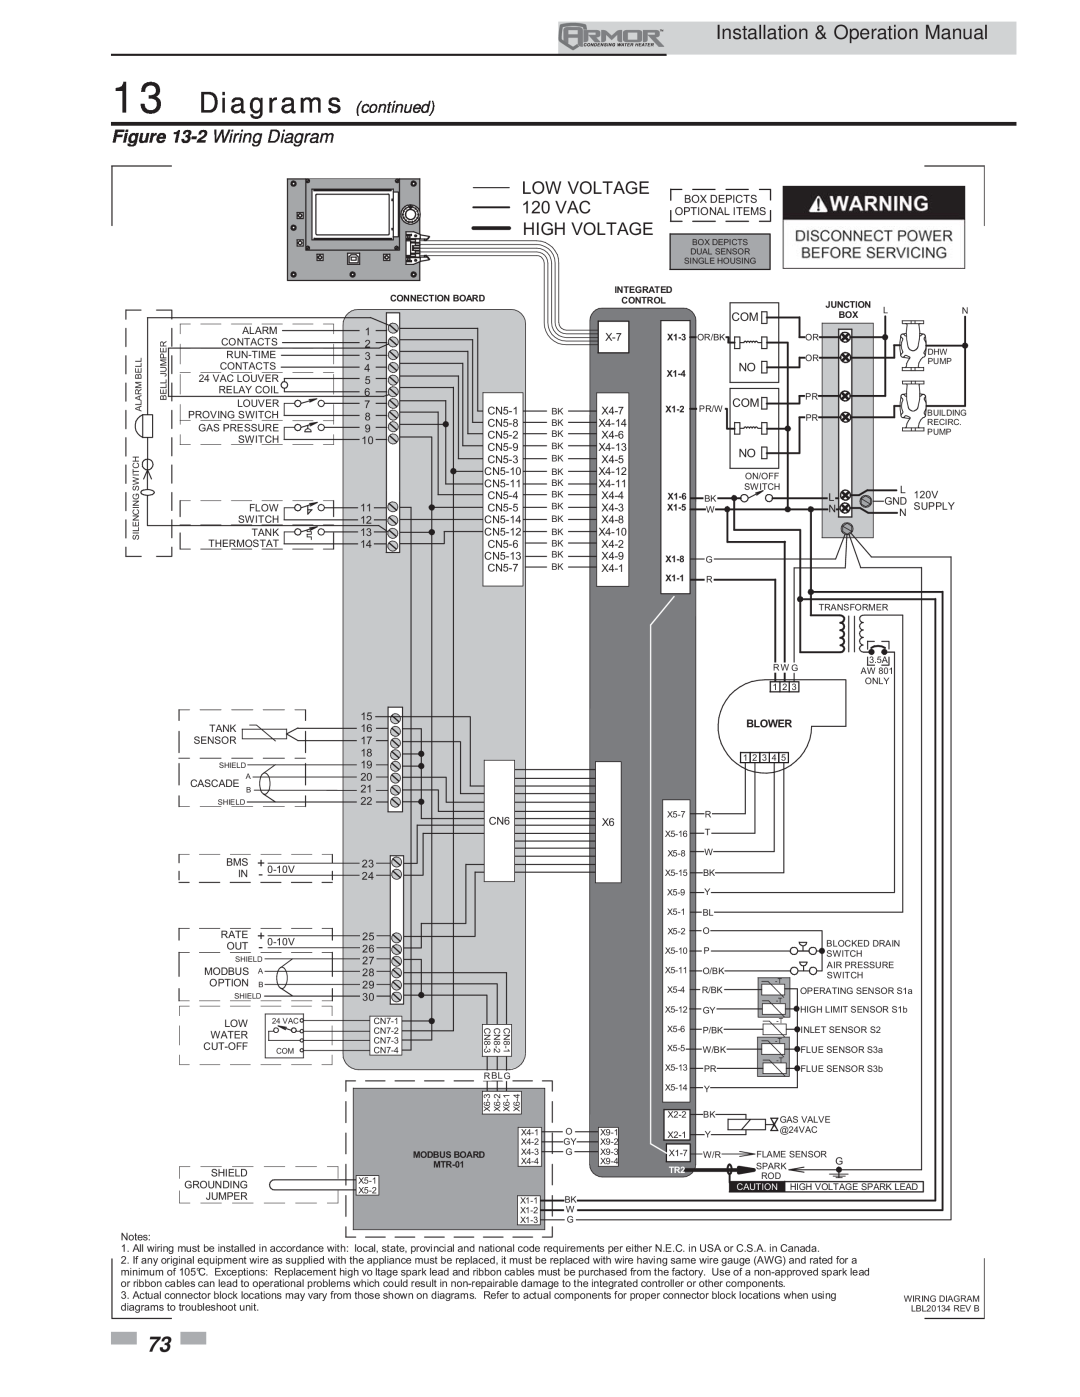 Lochinvar 151 2 Wiring Diagram, Installation & Operation Manual, LOW VOLTAGE 120 VAC HIGH VOLTAGE, Diagrams continued 